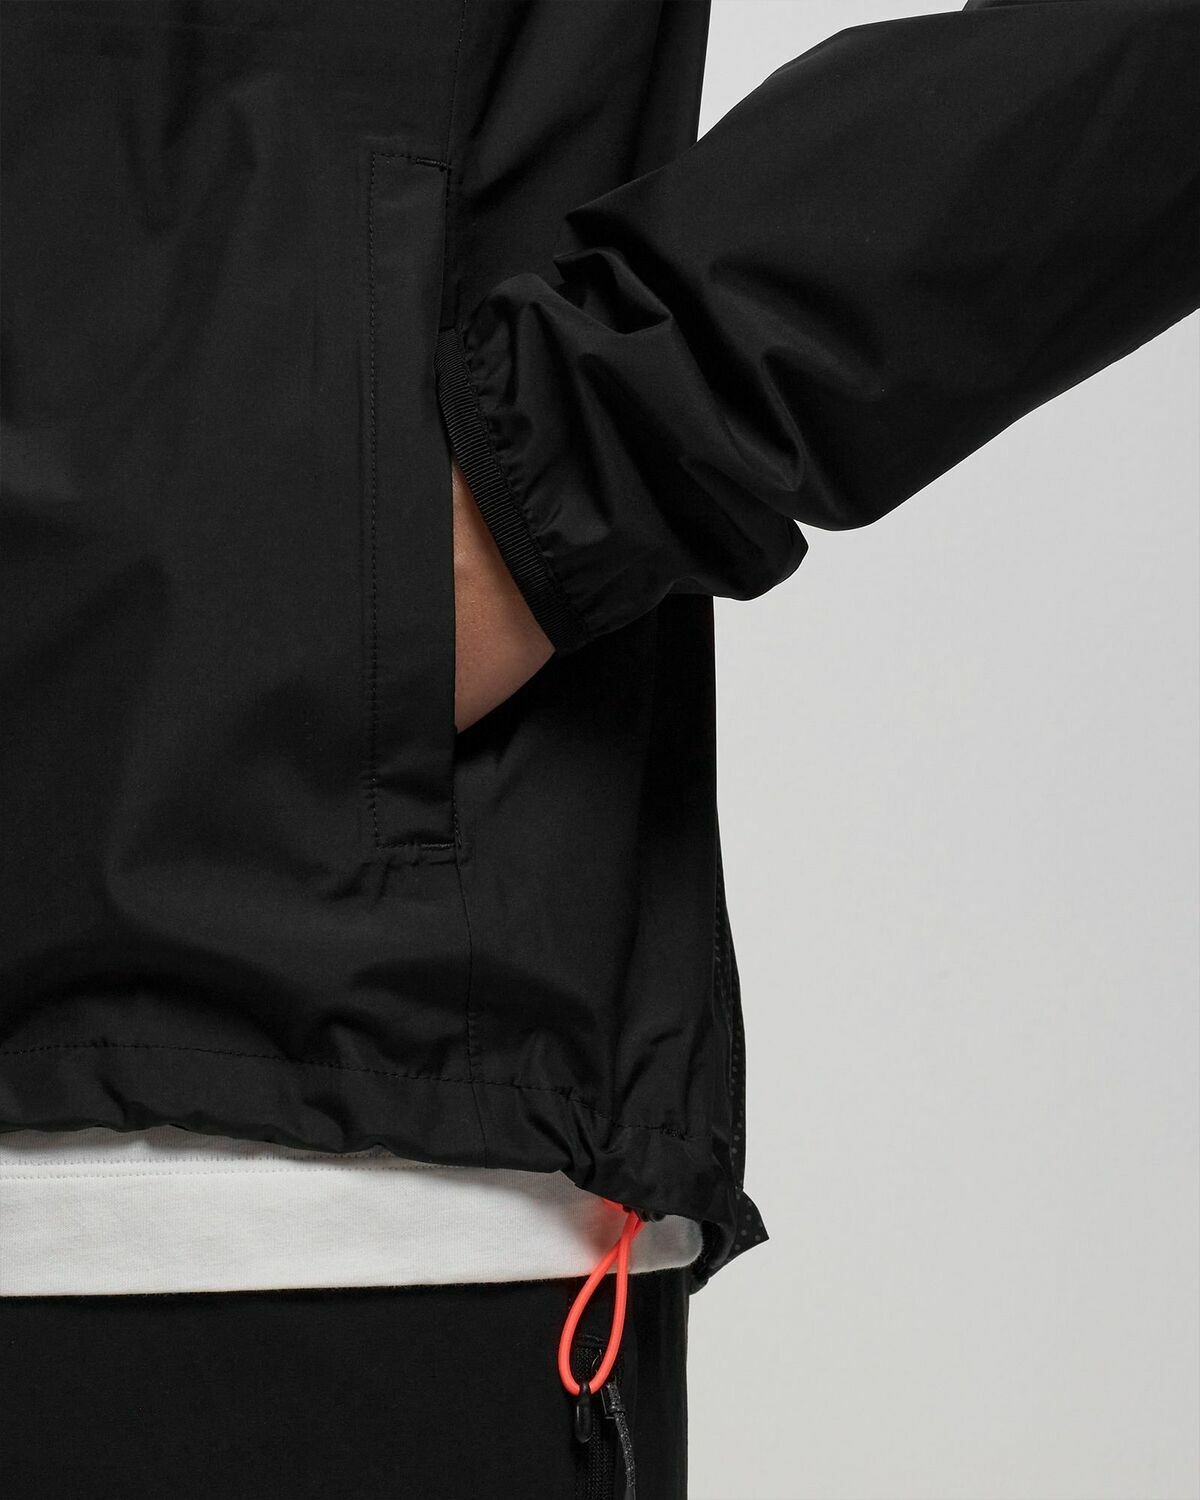 Rapha Commuter Jacket Black - Mens - Shell Jackets|Windbreaker Rapha